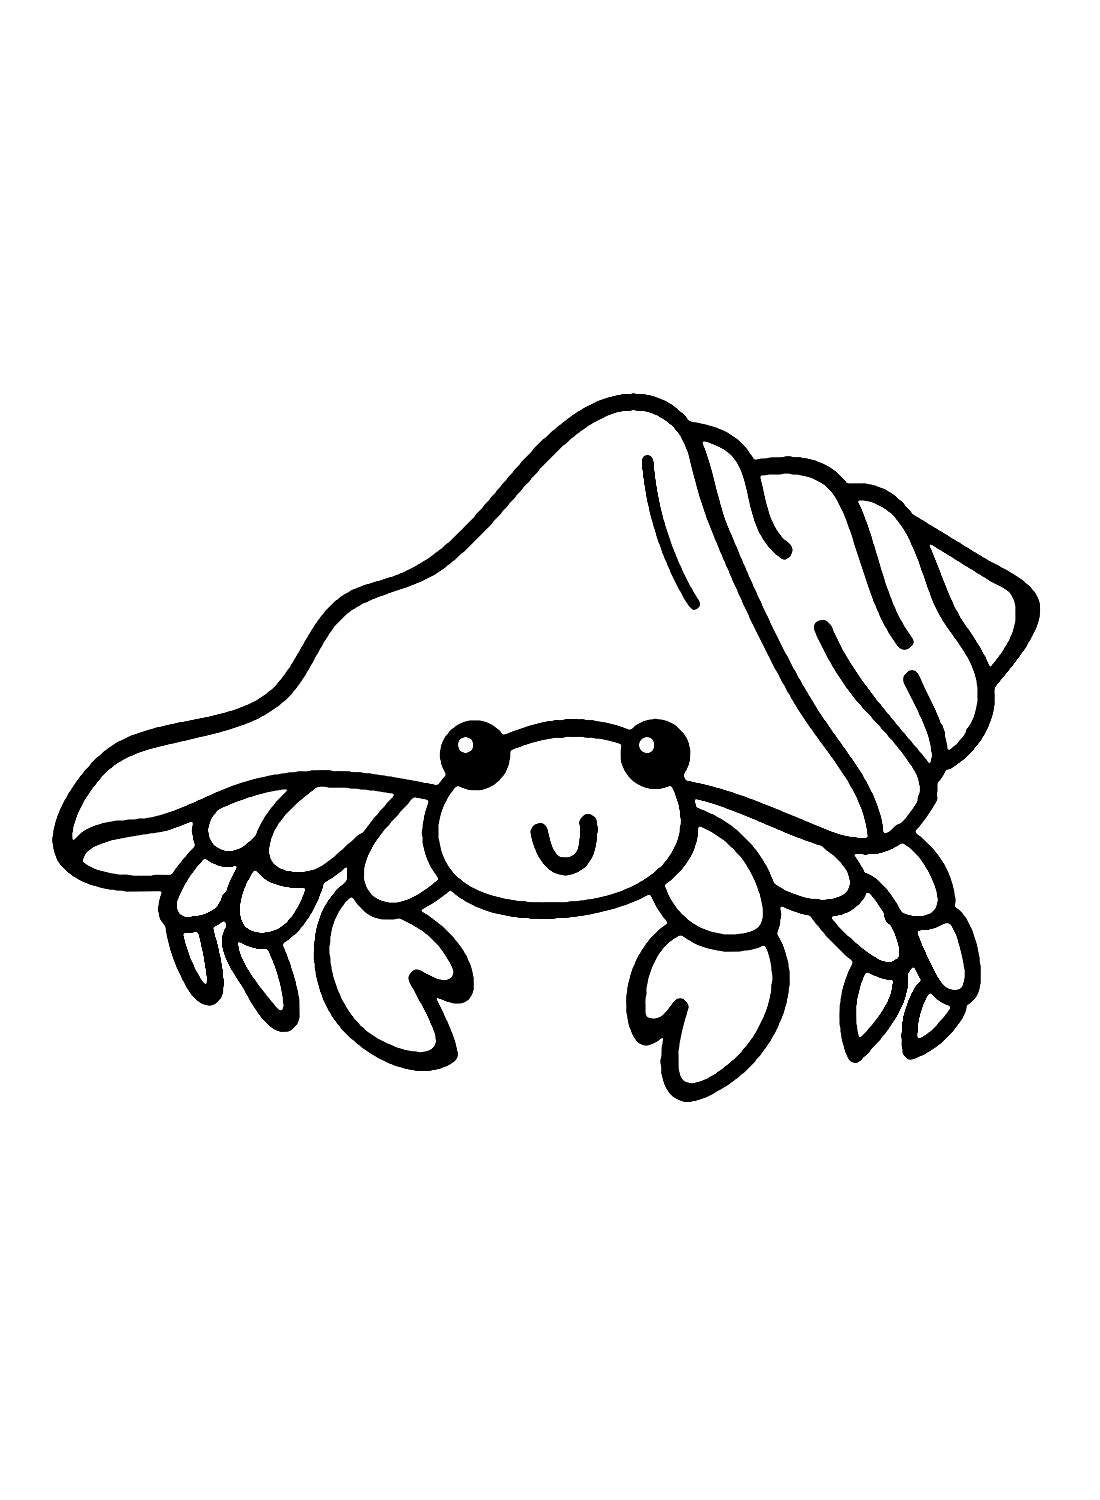 Hermit Crab Crustacean from Hermit Crab